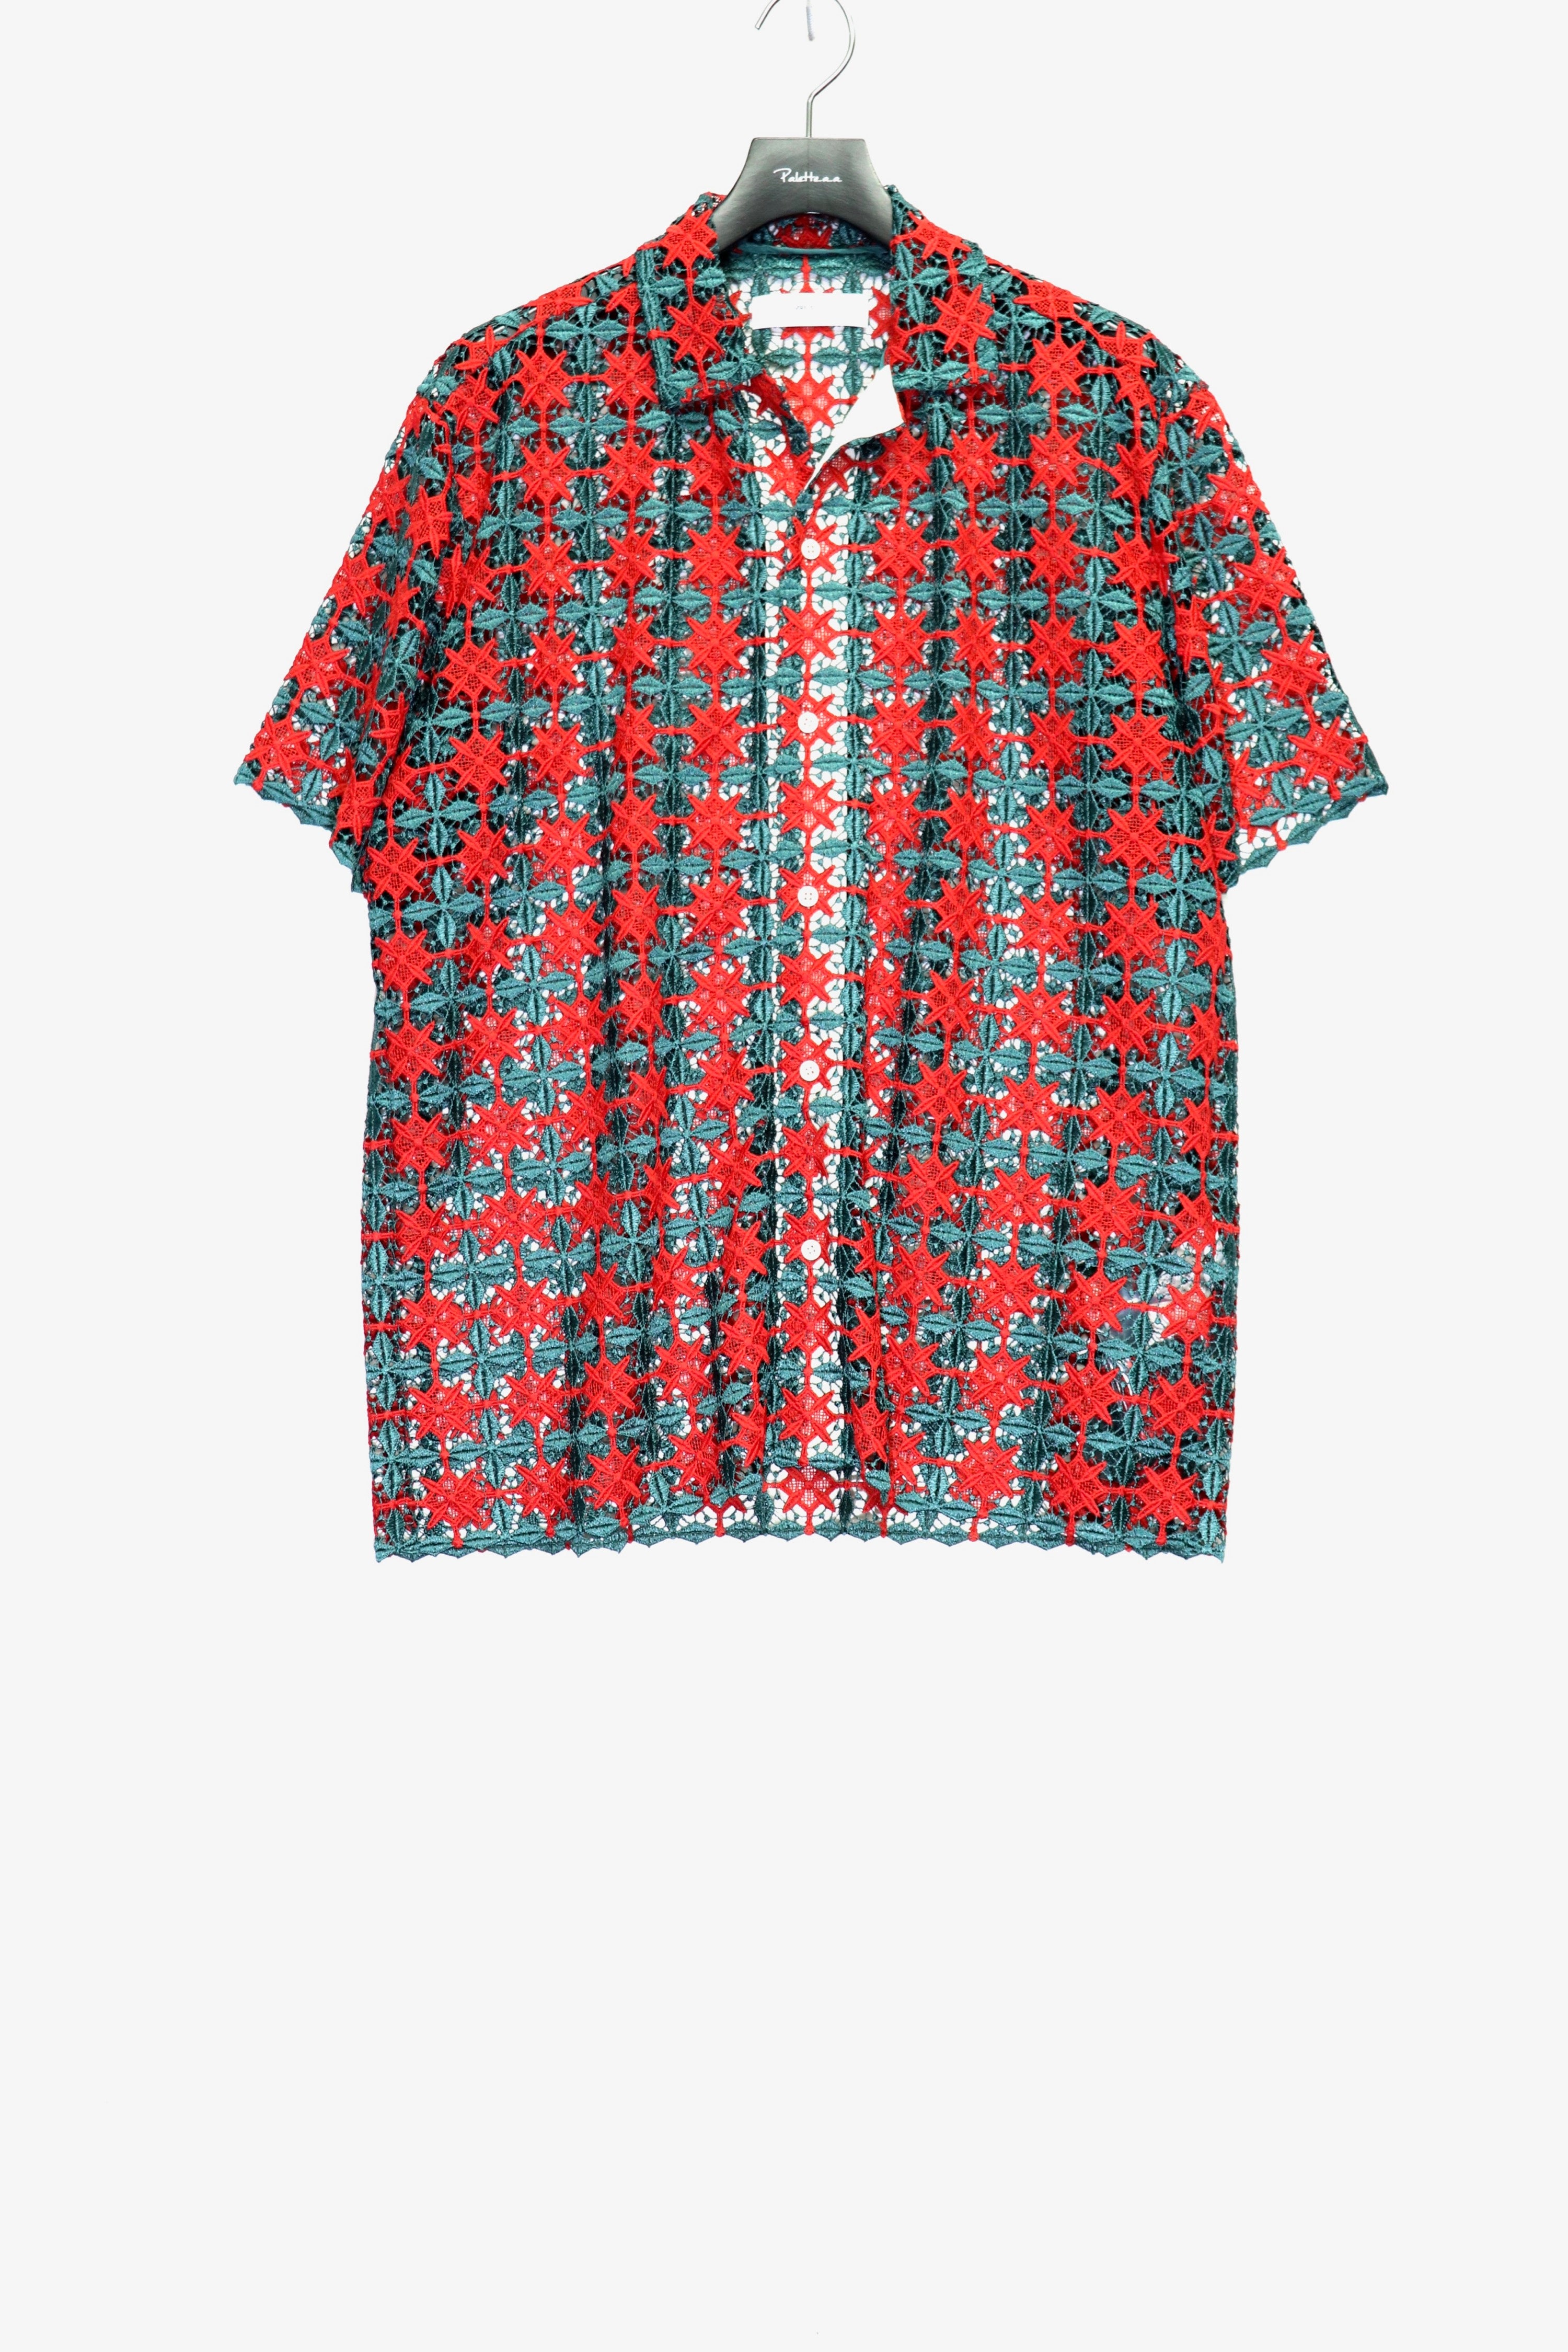 TOGA VIRILIS(トーガ ビリリース)22ssのLace Shirt Color REDの通販 ...